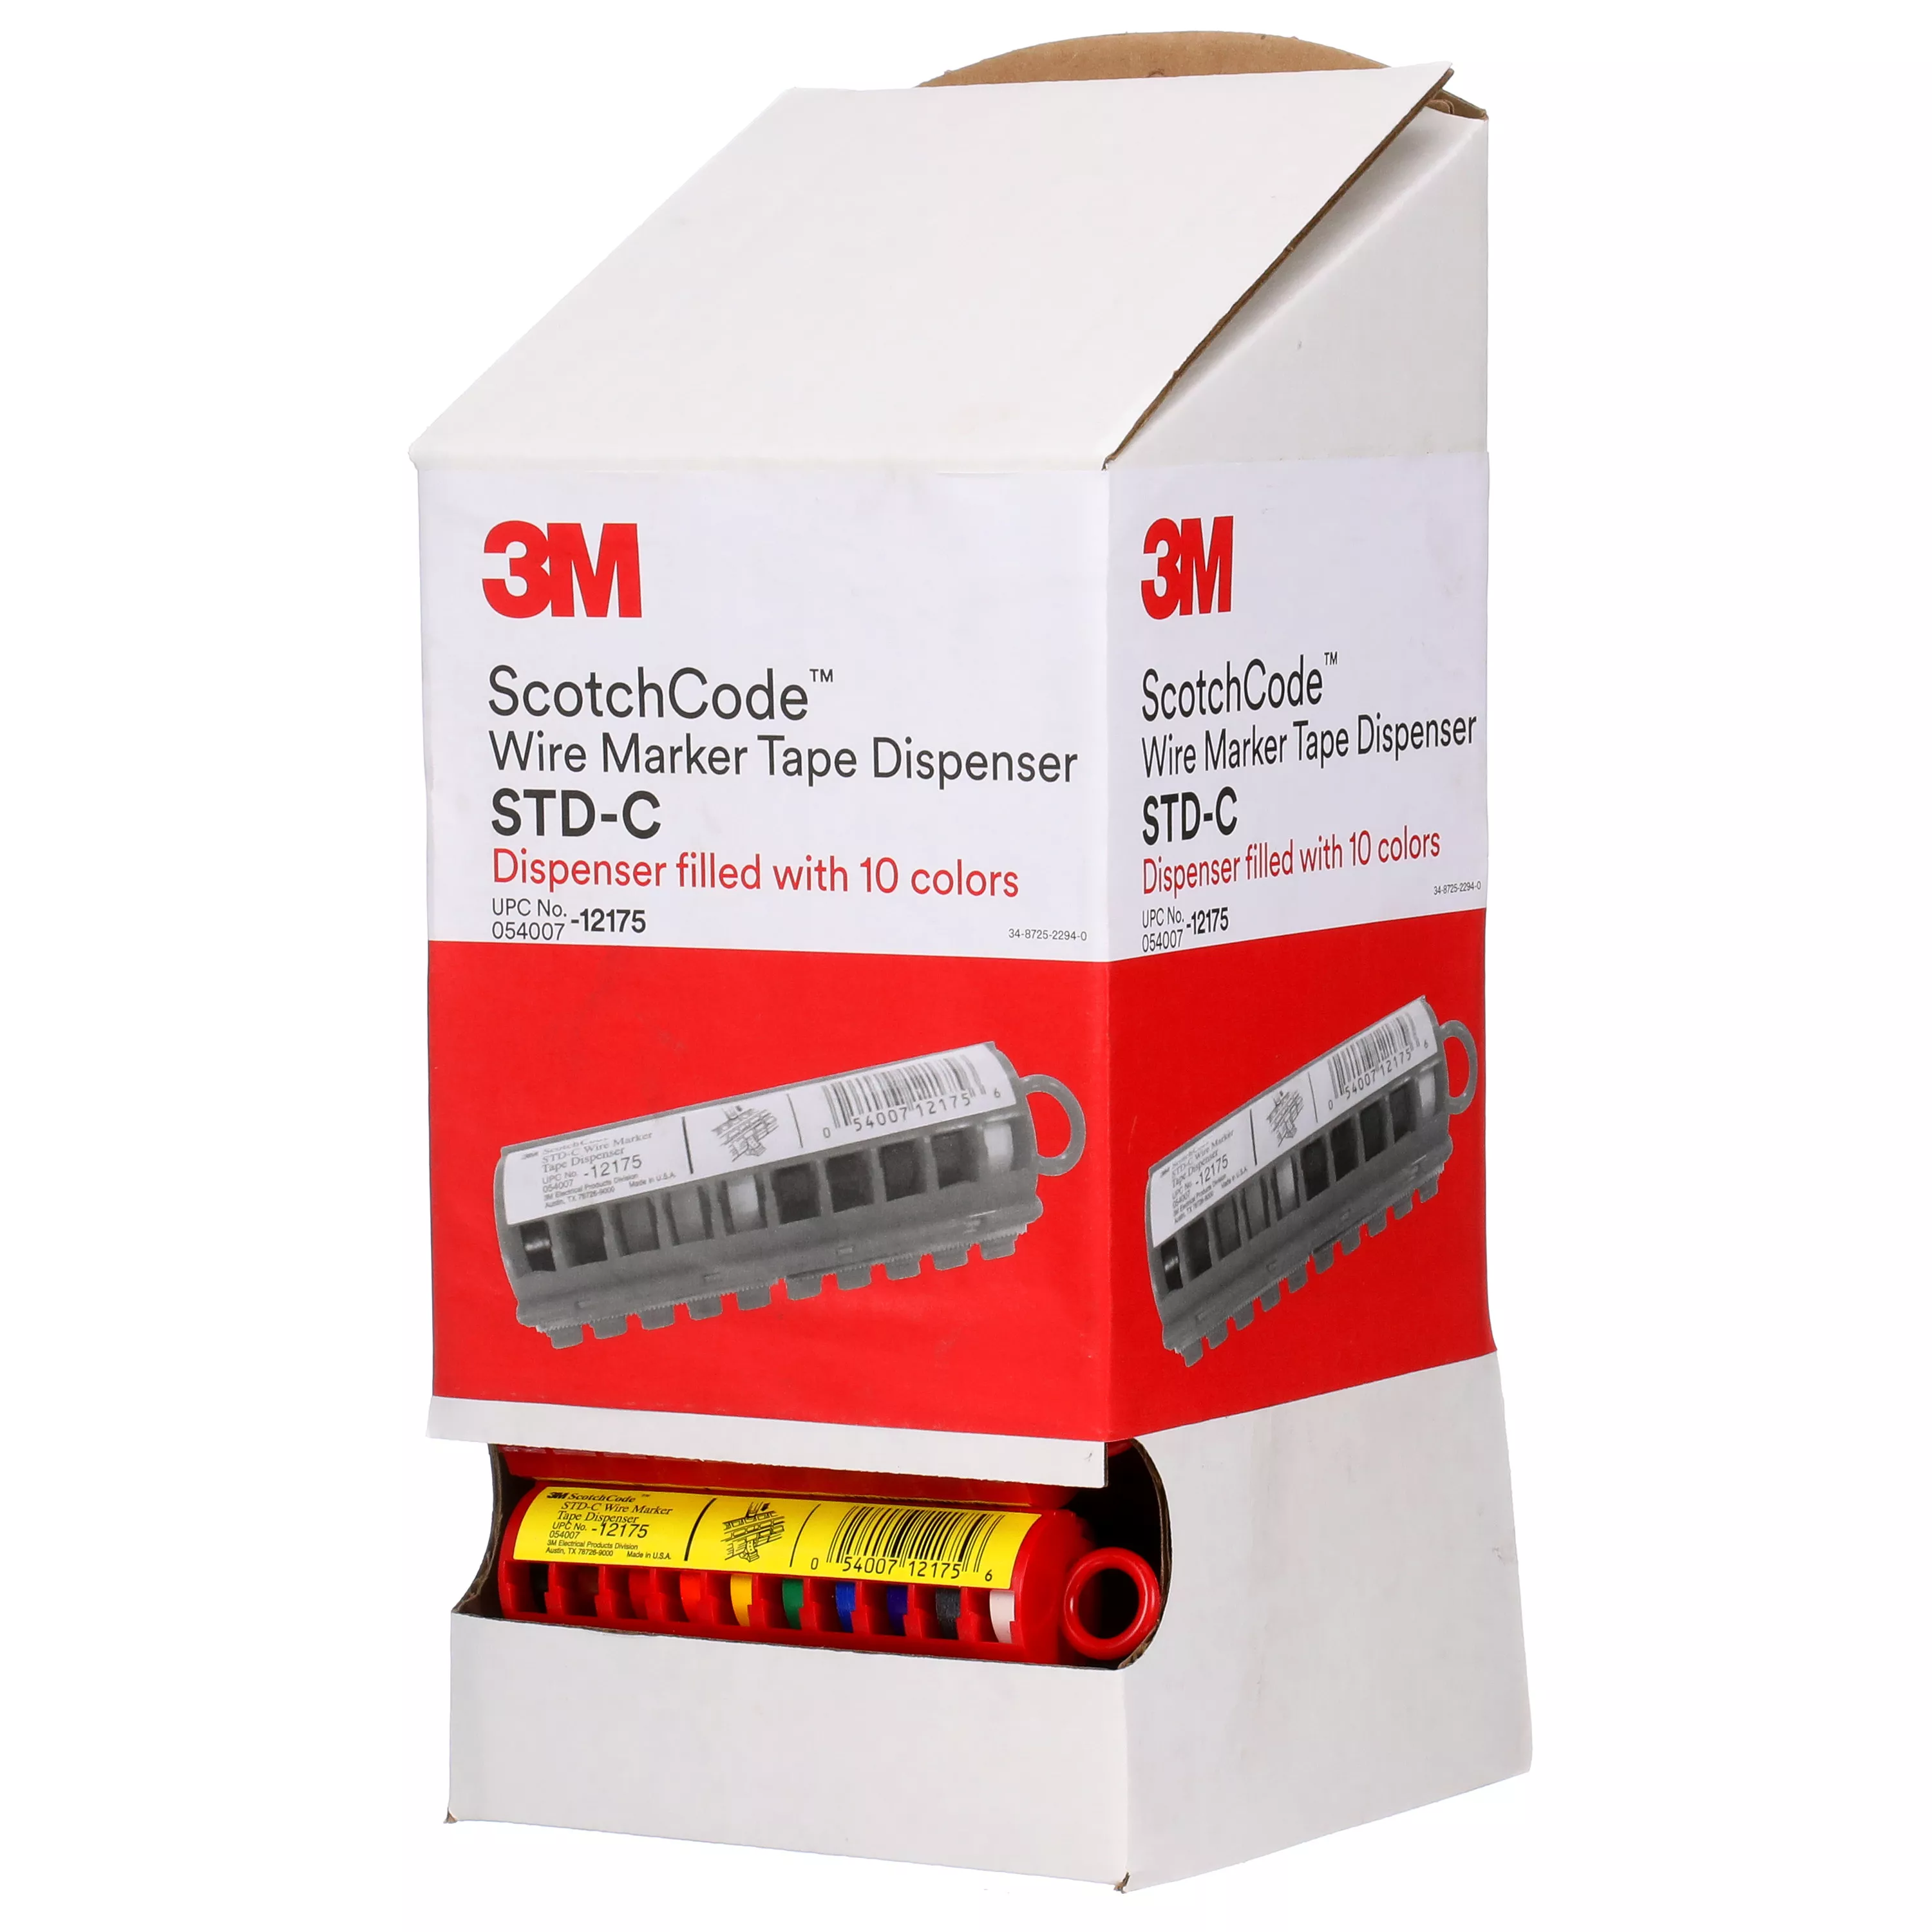 SKU 7000031515 | 3M™ ScotchCode™ Wire Marker Tape Dispenser with Tape STD-C